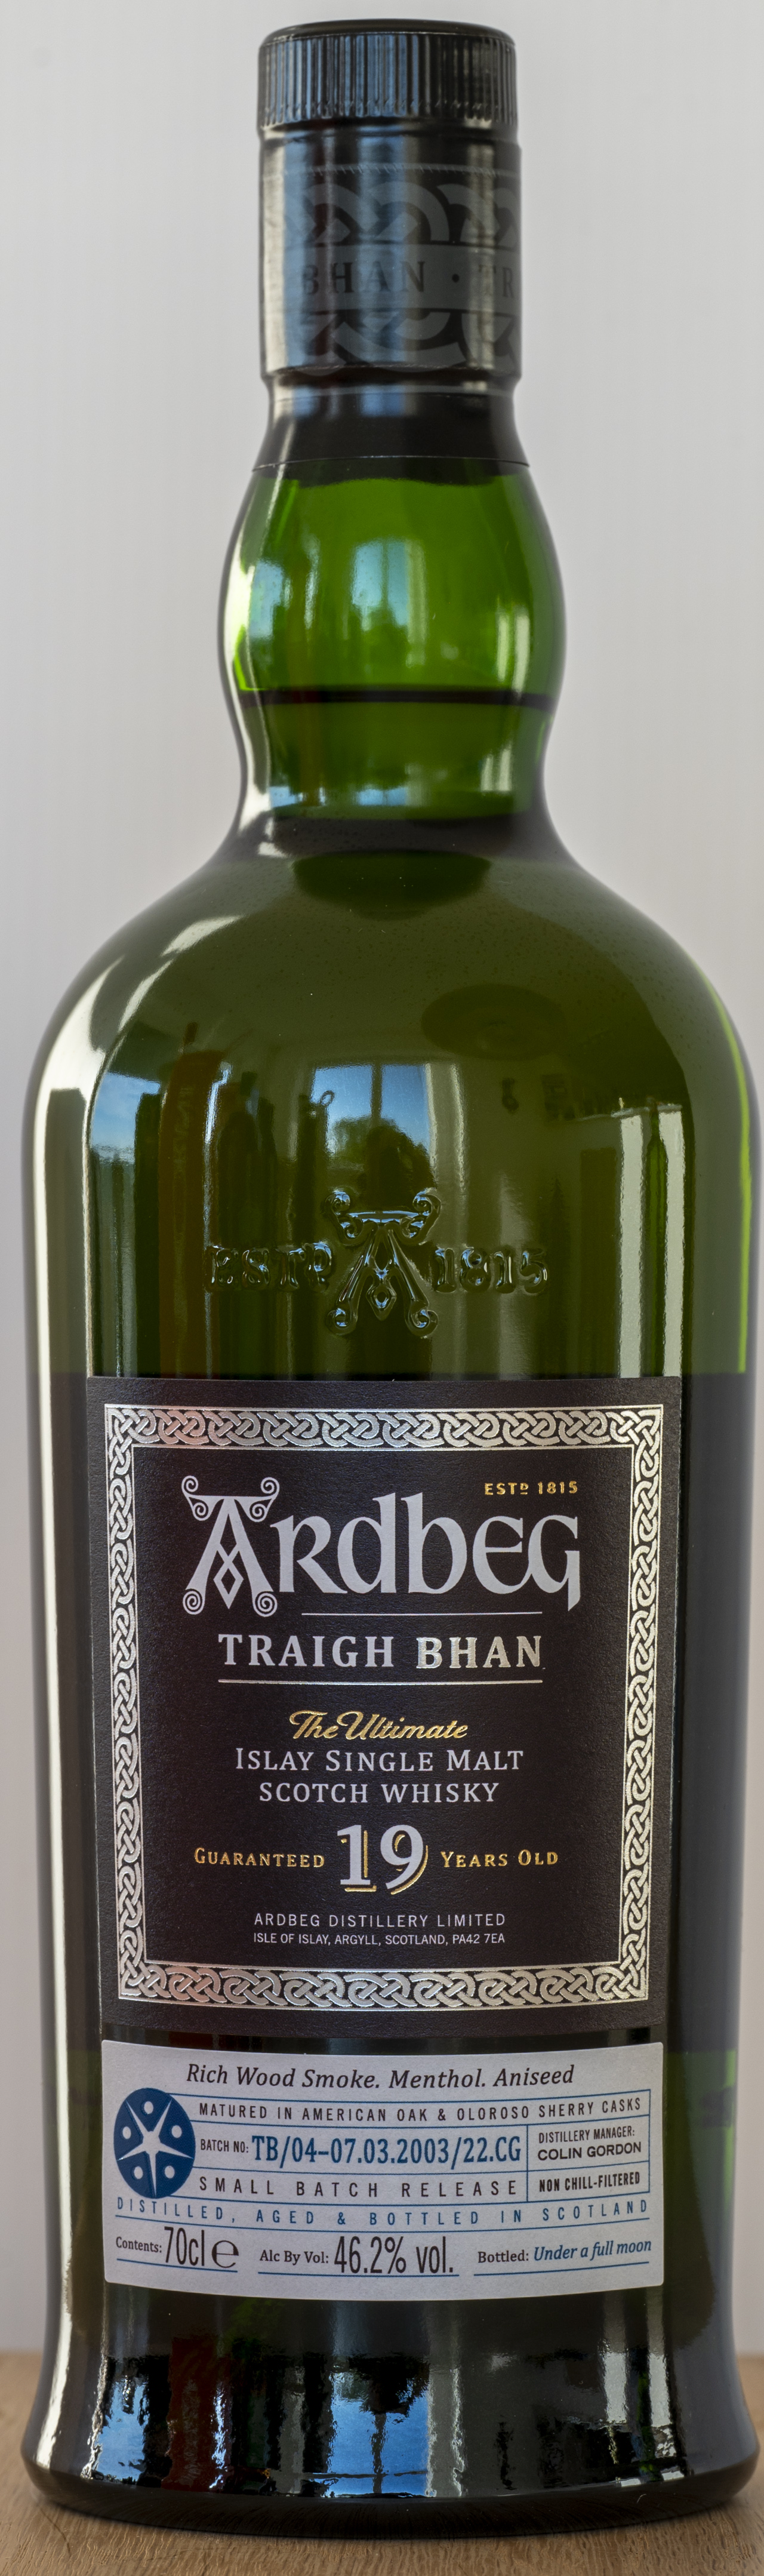 Billede: Z62_6466 - Ardbeg Thraigh Bhan batch 4 - bottle front.jpg